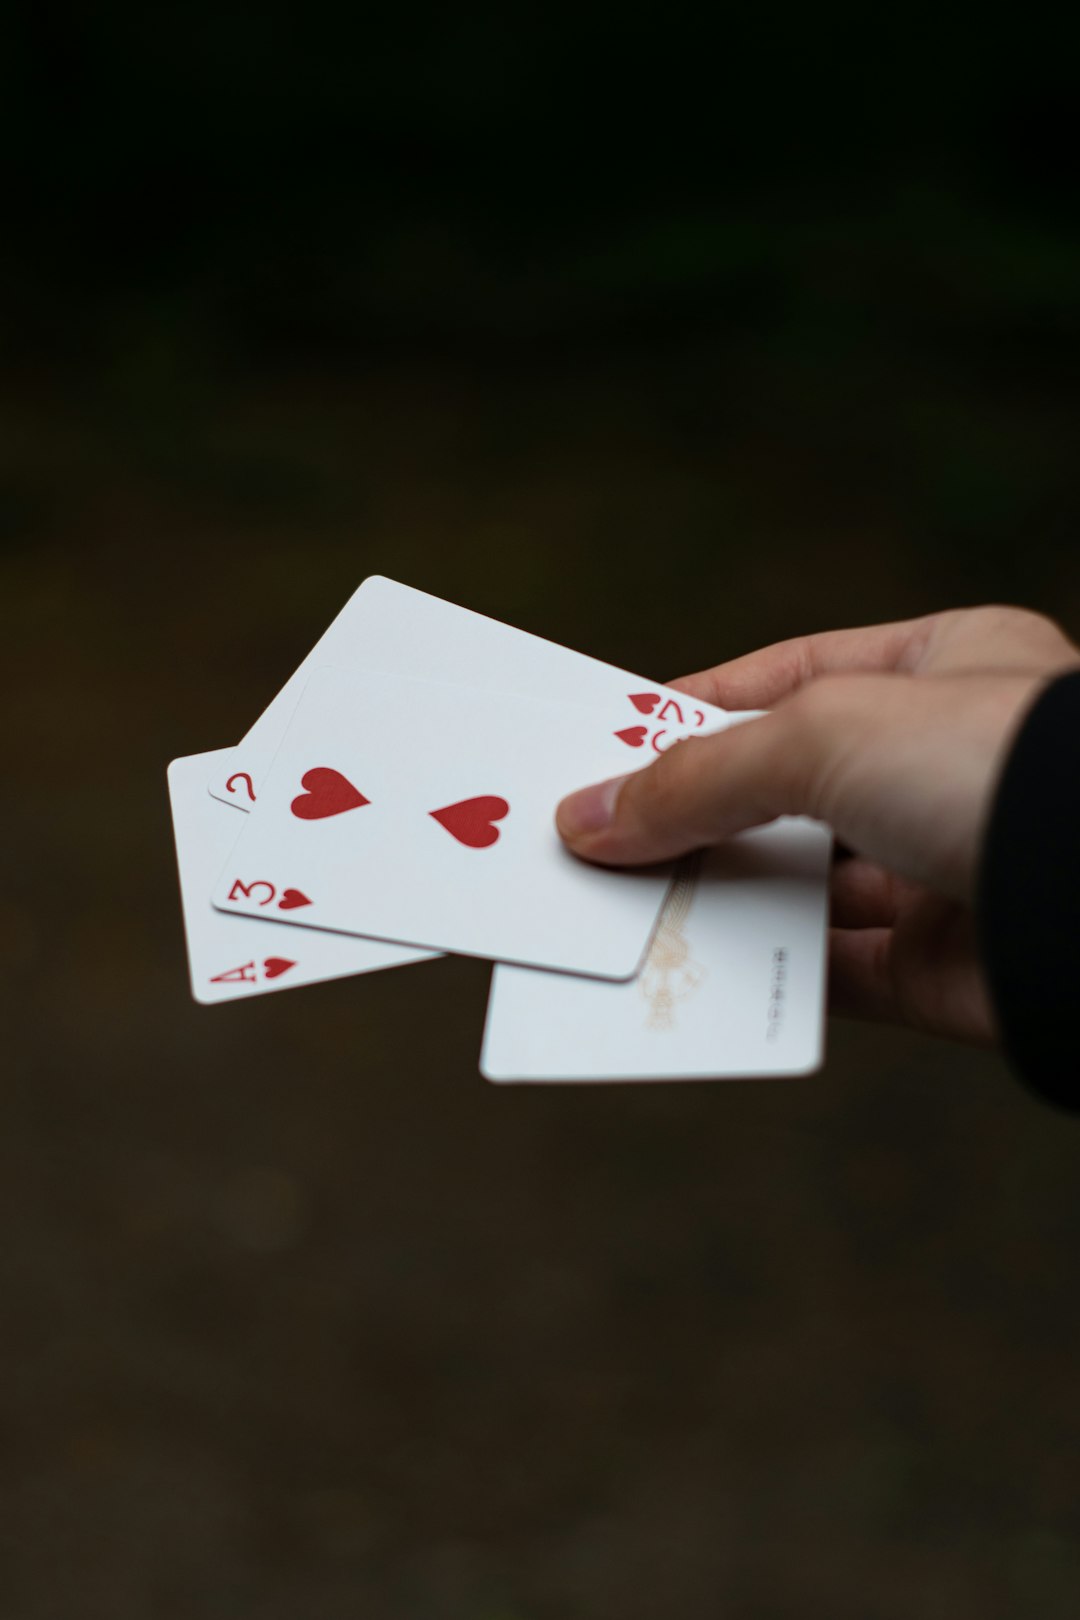 3 of diamonds playing card